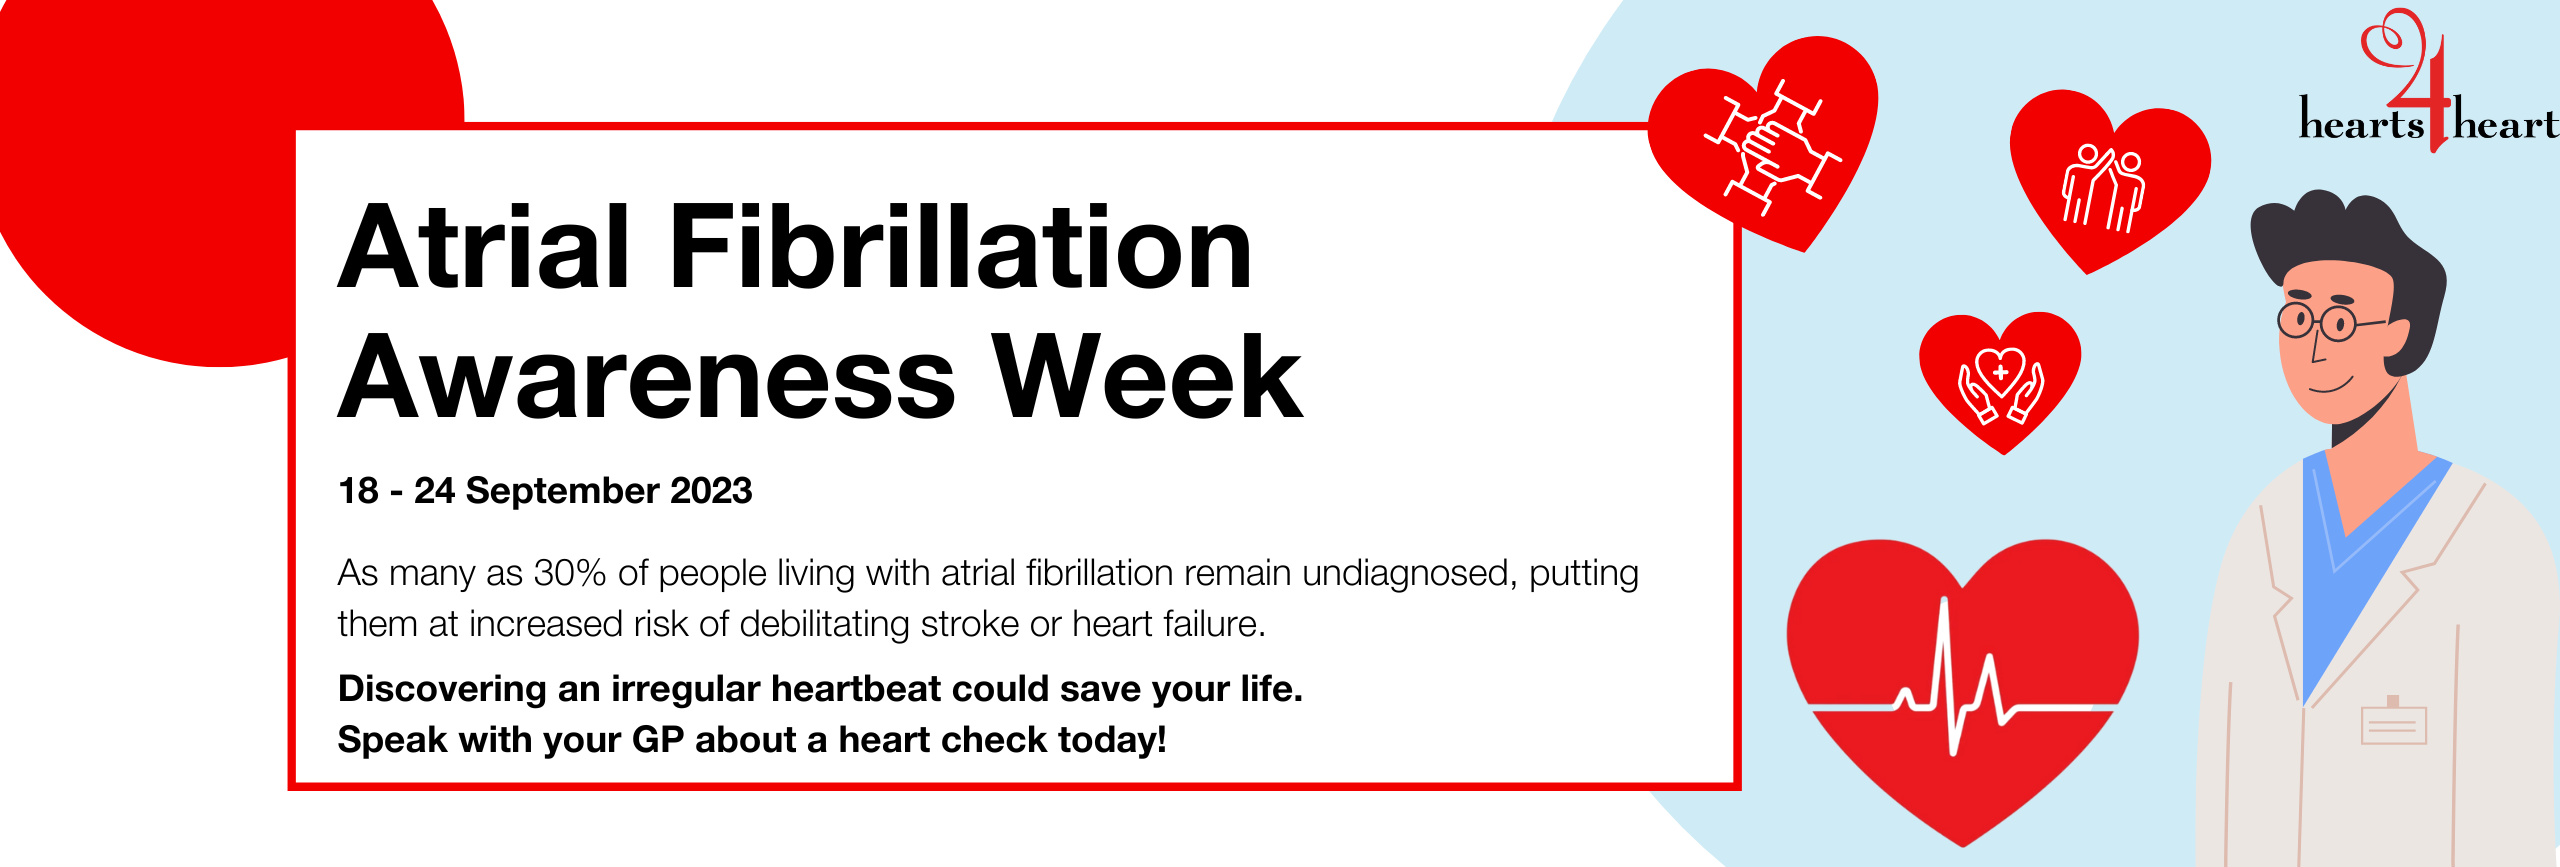 Atrial Fibrillation Awareness Week – 18-24 September